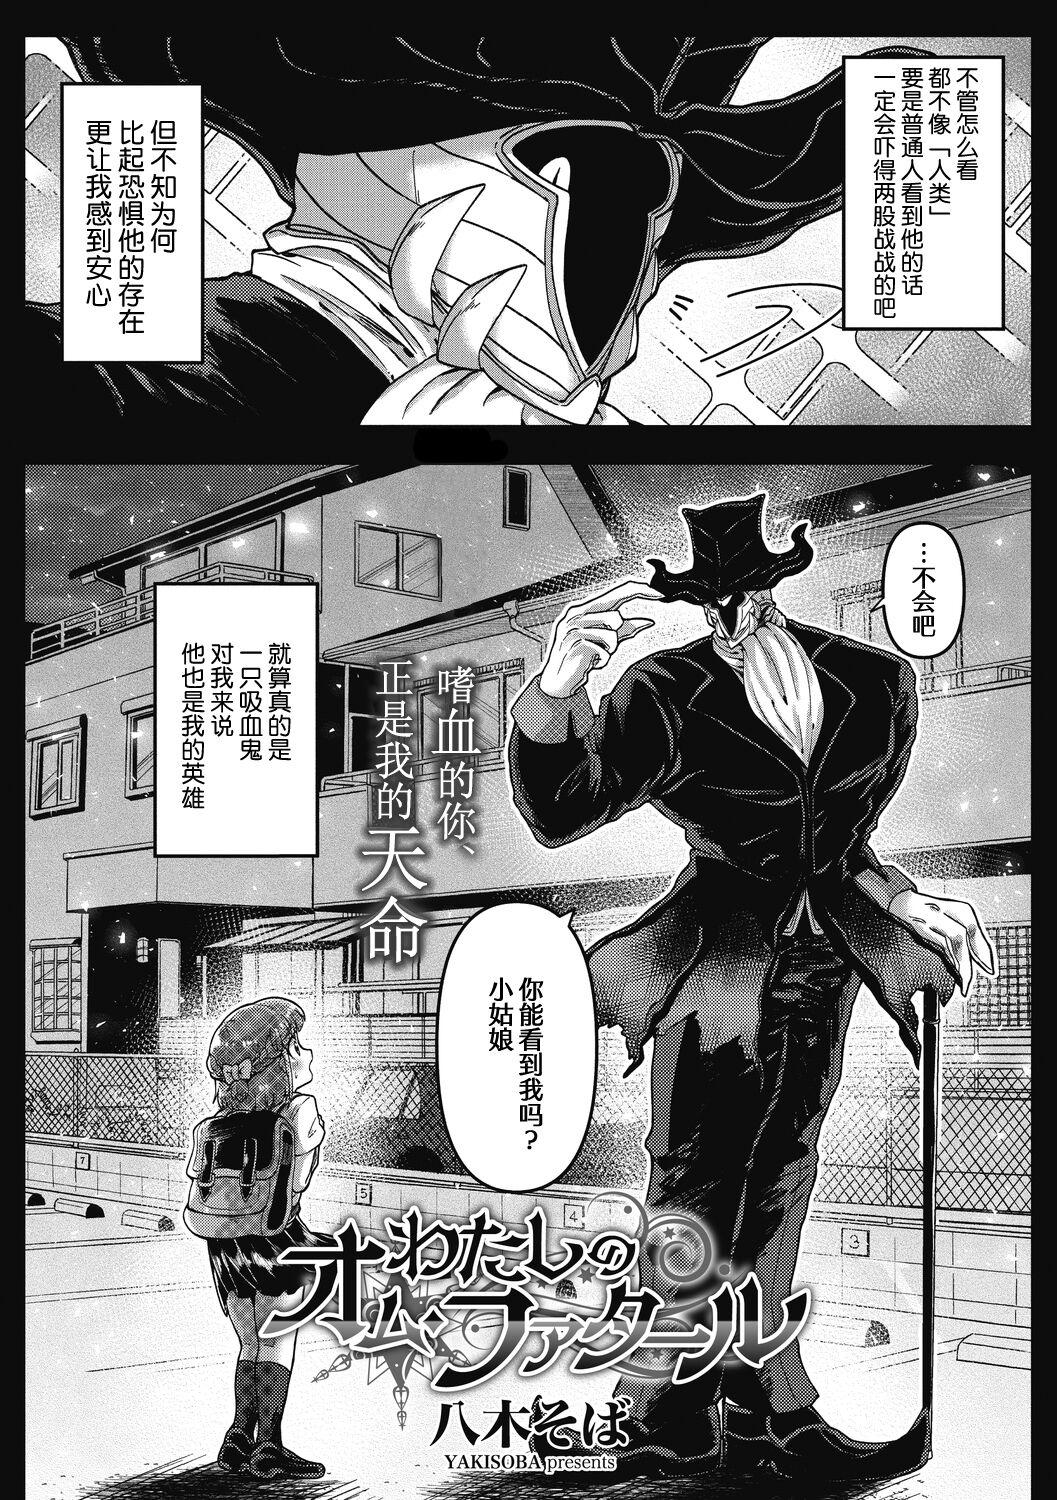 Novinho Watashi no Homme Fatale Bang Bros - Page 4